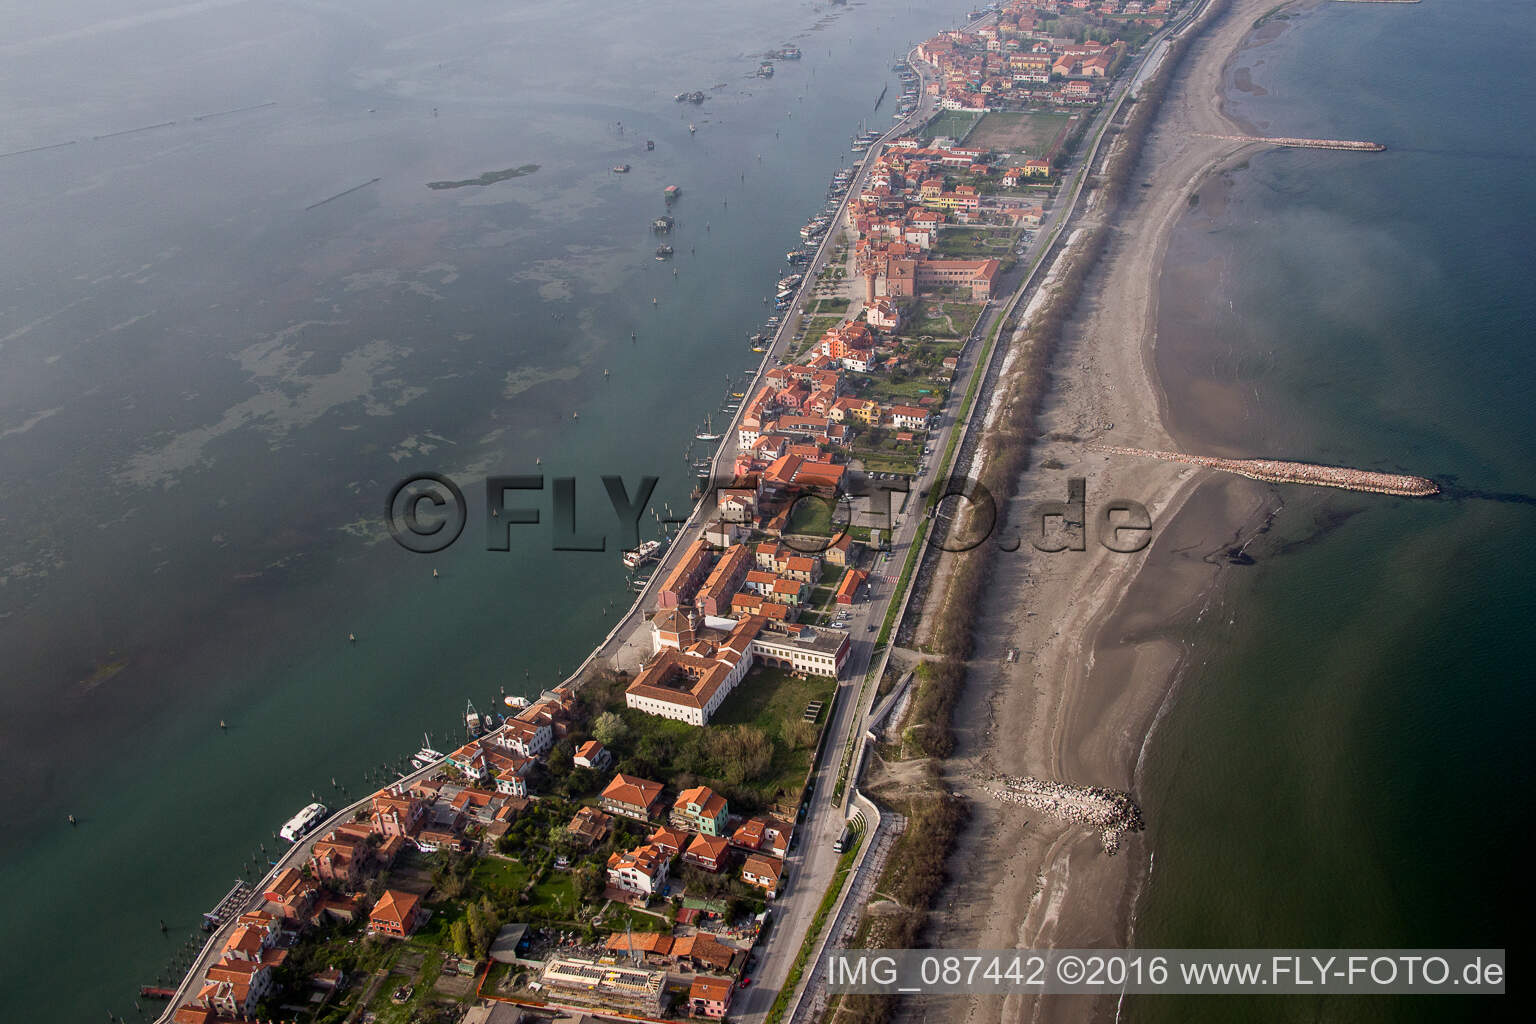 Drone recording of Settlement area in the district Pellestrina in Venedig in Venetien, Italy